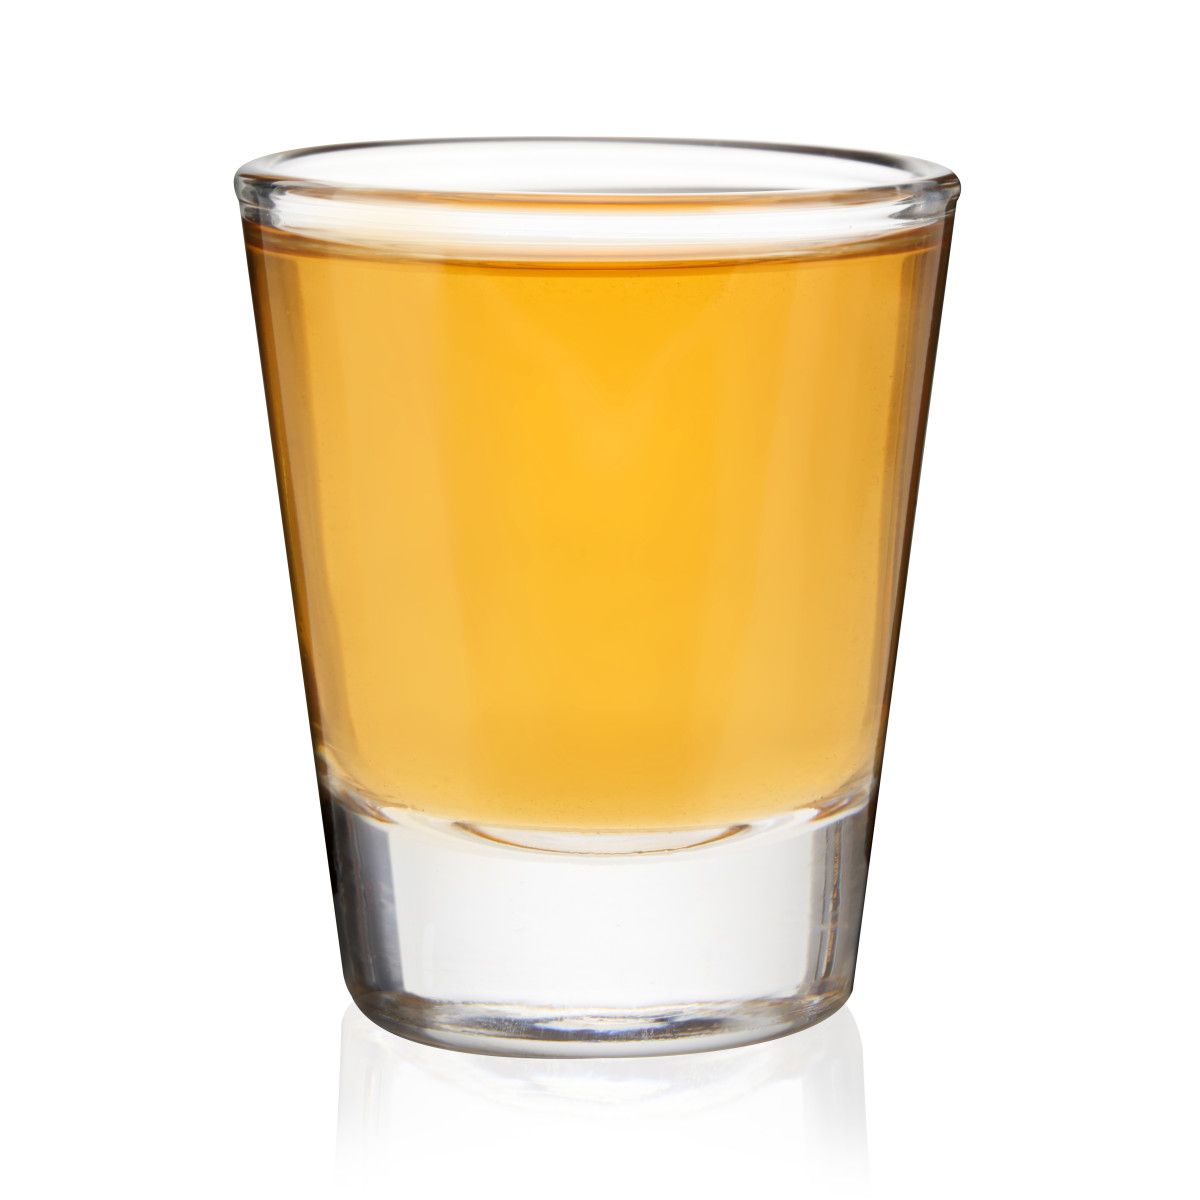 1.5 oz Fluted Shot Glass in Bulk, Whiskey or Vodka Shot Glasses